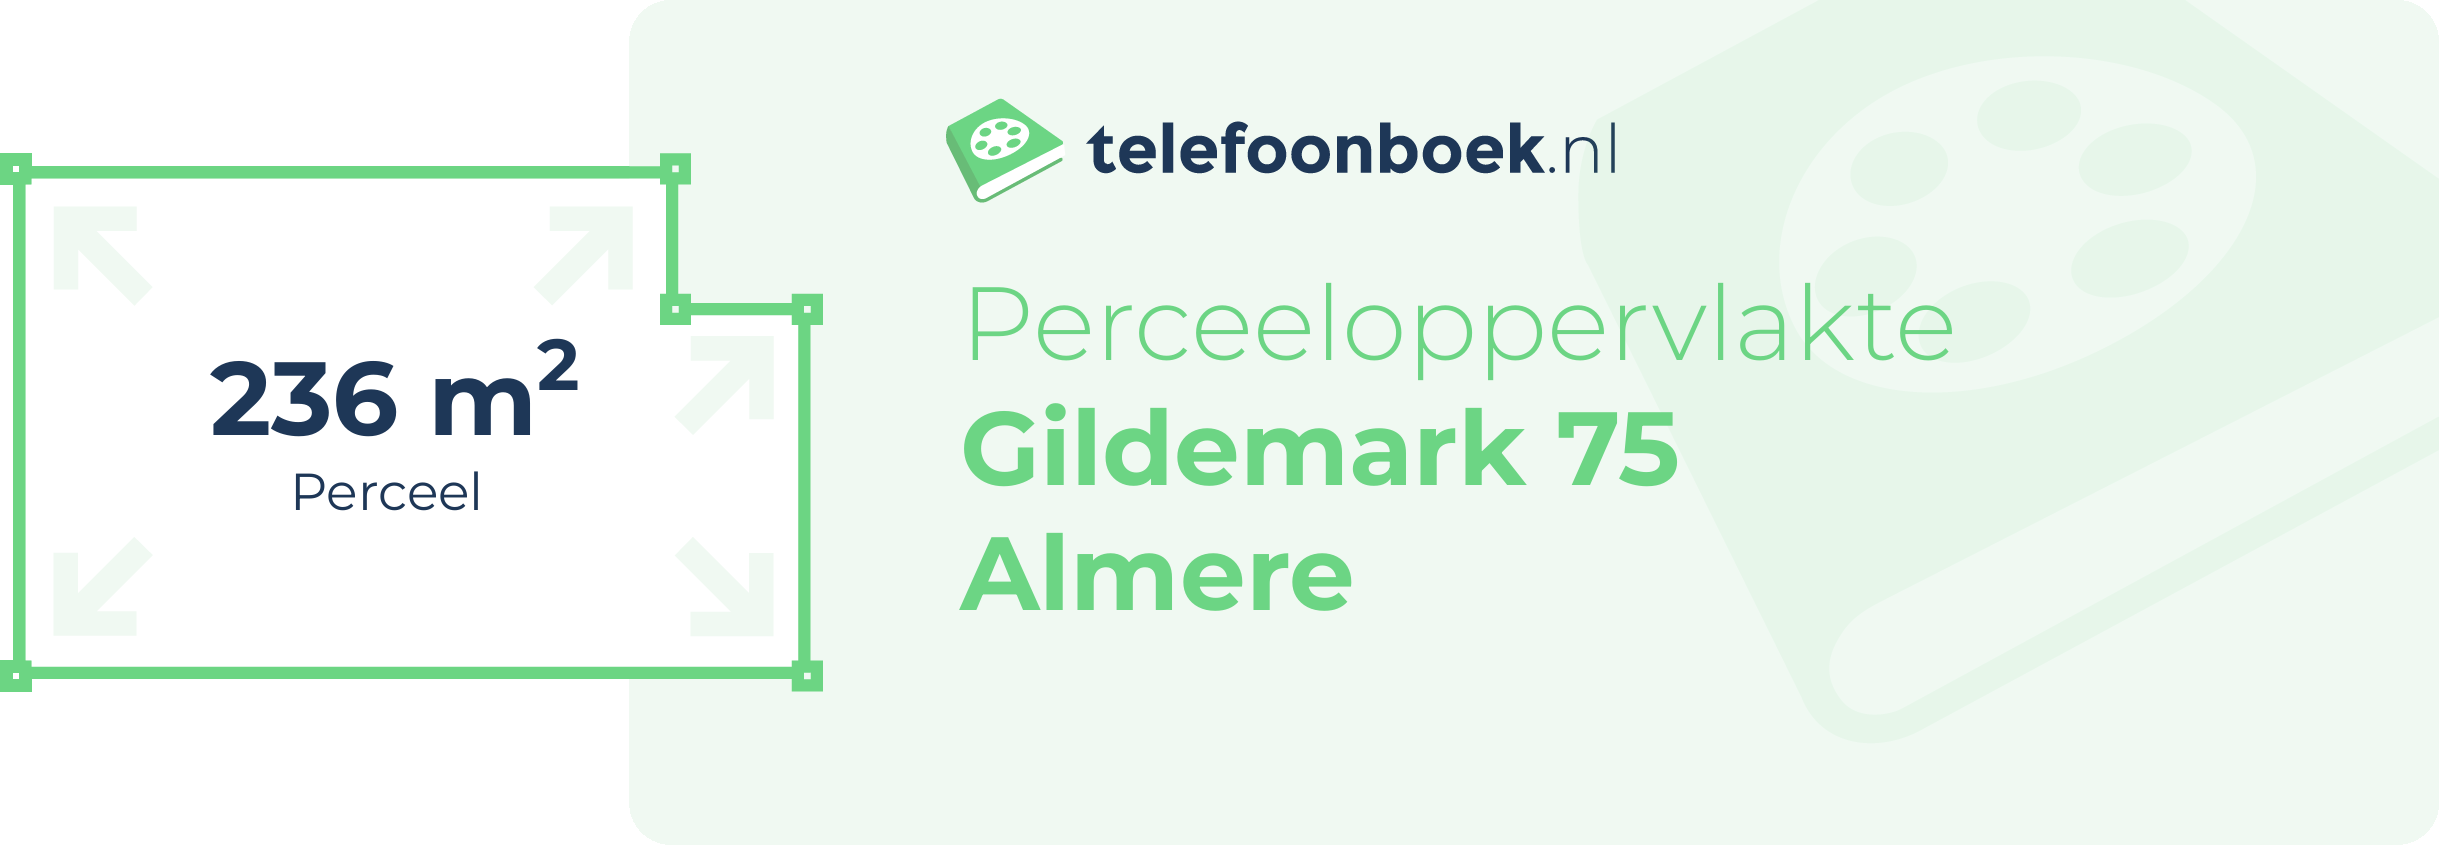 Perceeloppervlakte Gildemark 75 Almere